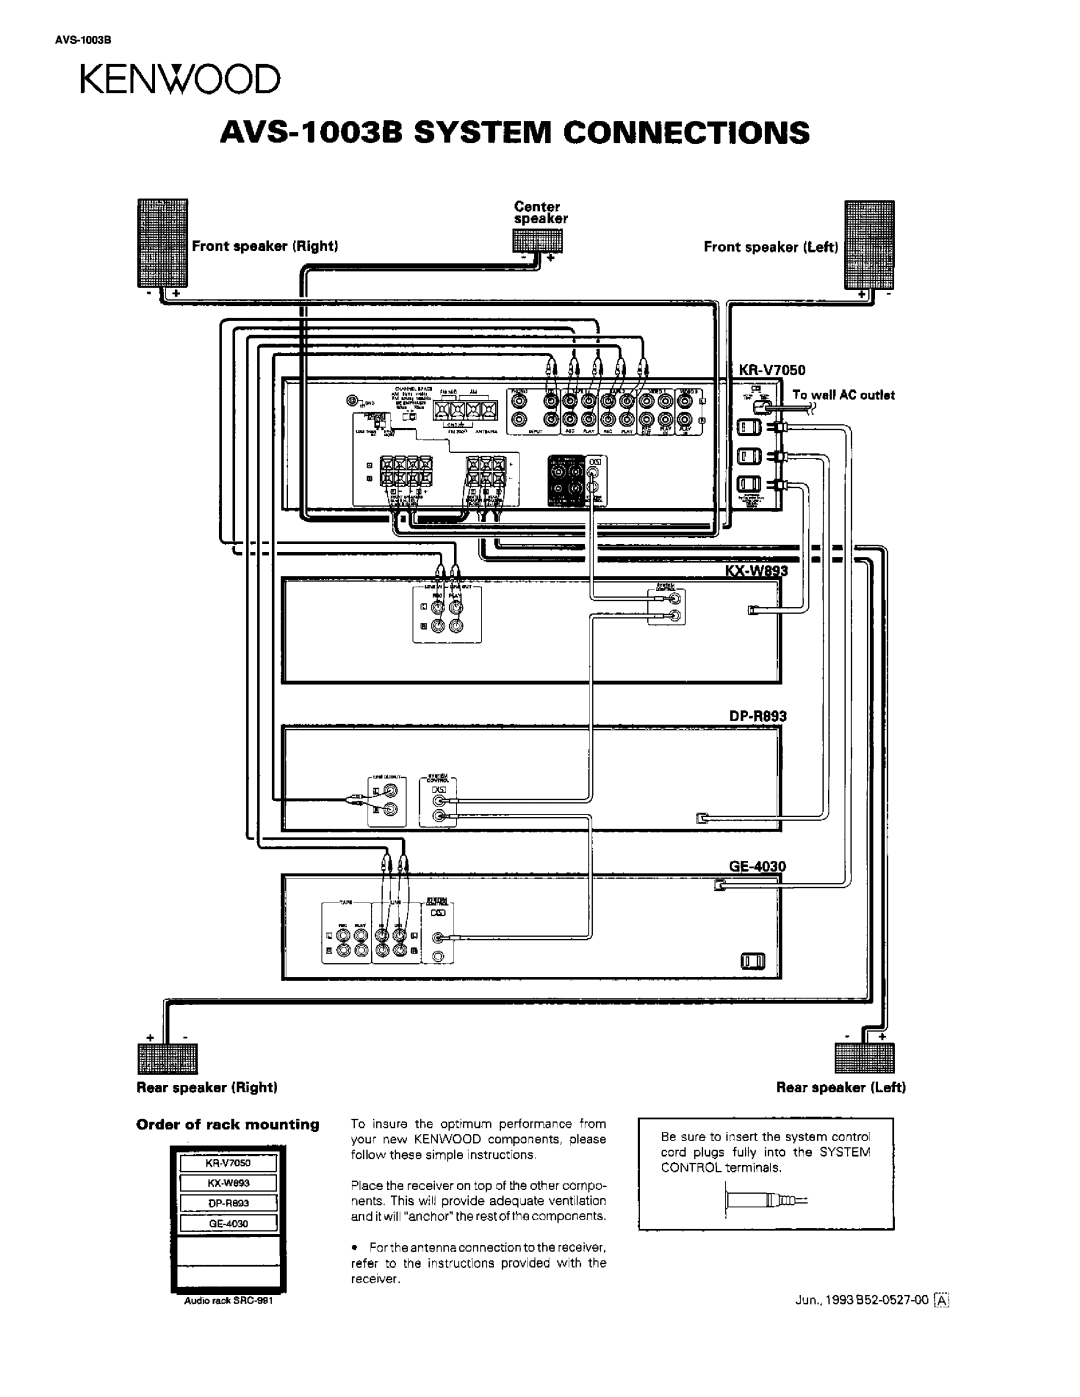 Kenwood AVS-1003B manual 